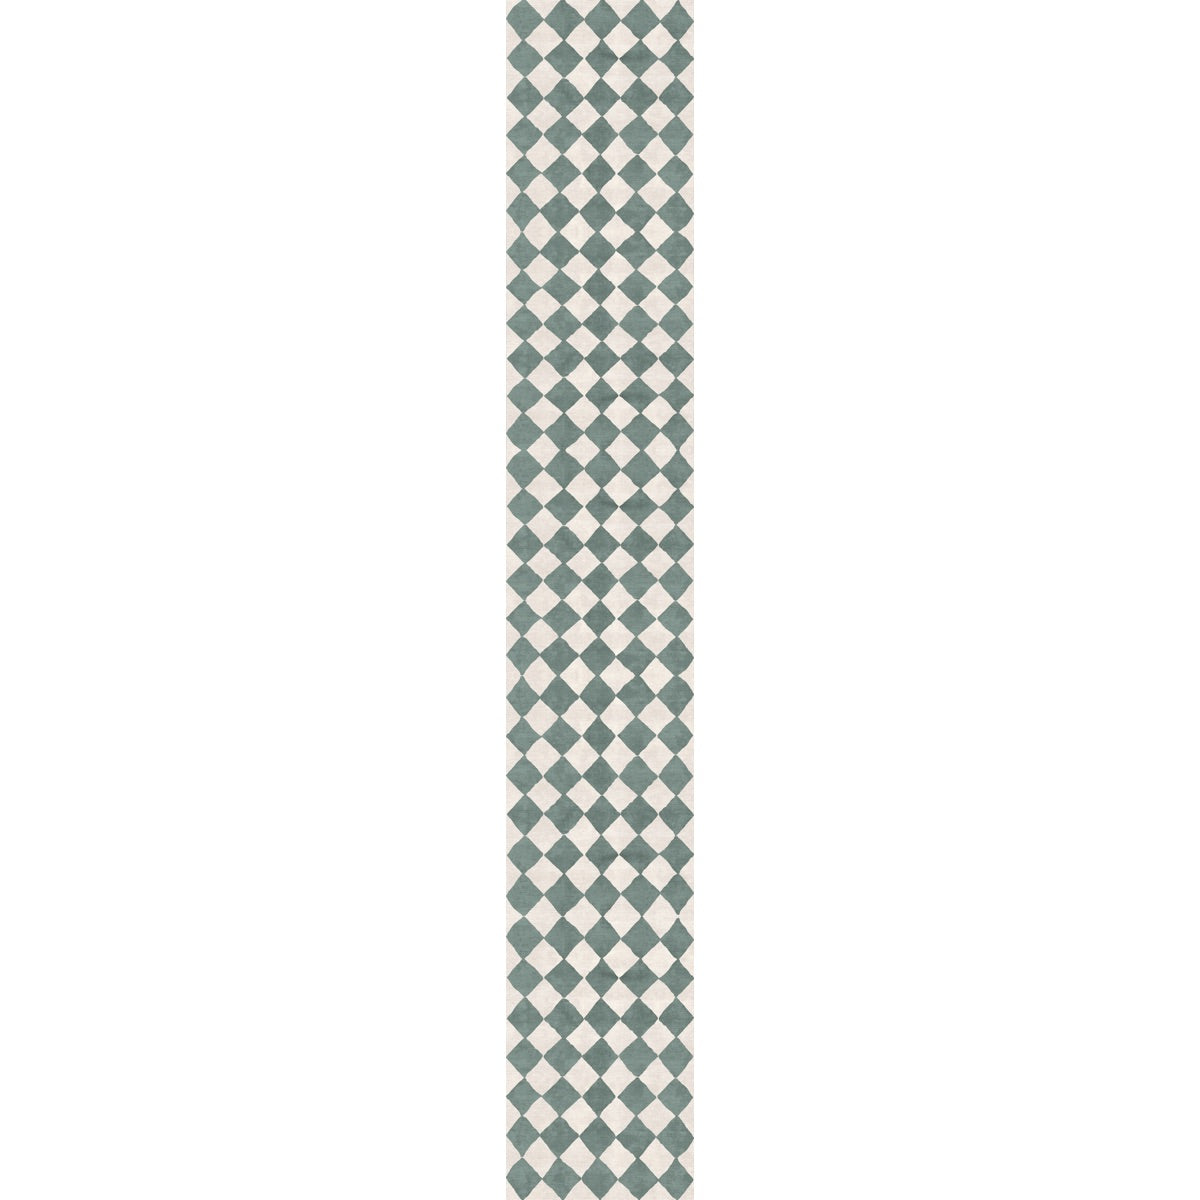 Trestres Checkered Slate Green & Ivory Rug